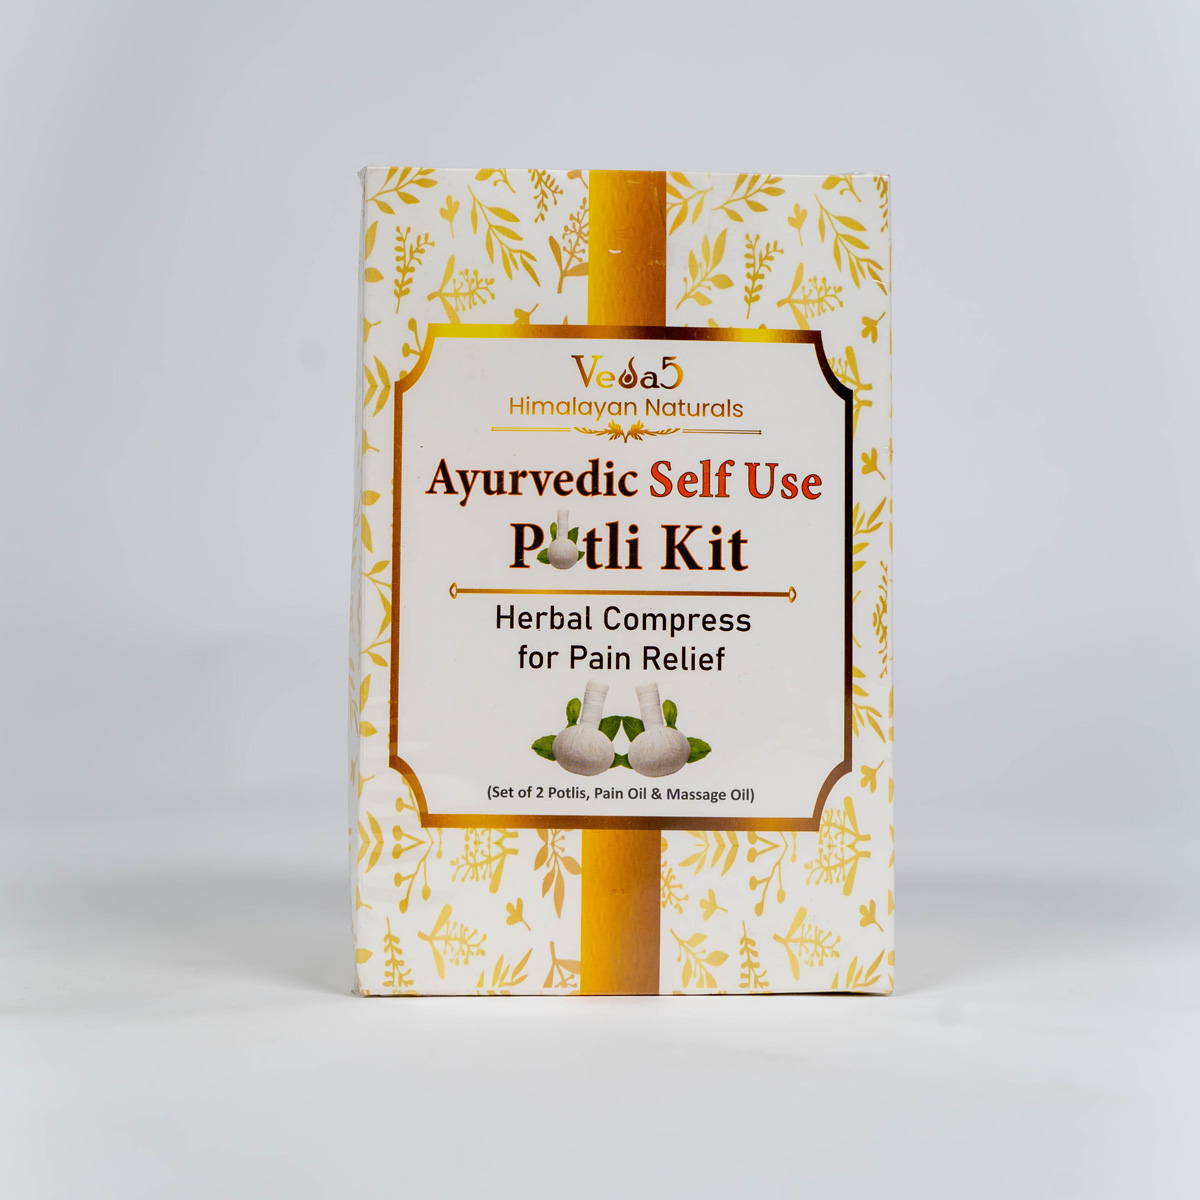 Veda5 Ayurvedic Self Use Potli Kit Pain Relief Oil Medicated Oil 2 Potlis Herbal Compress 1